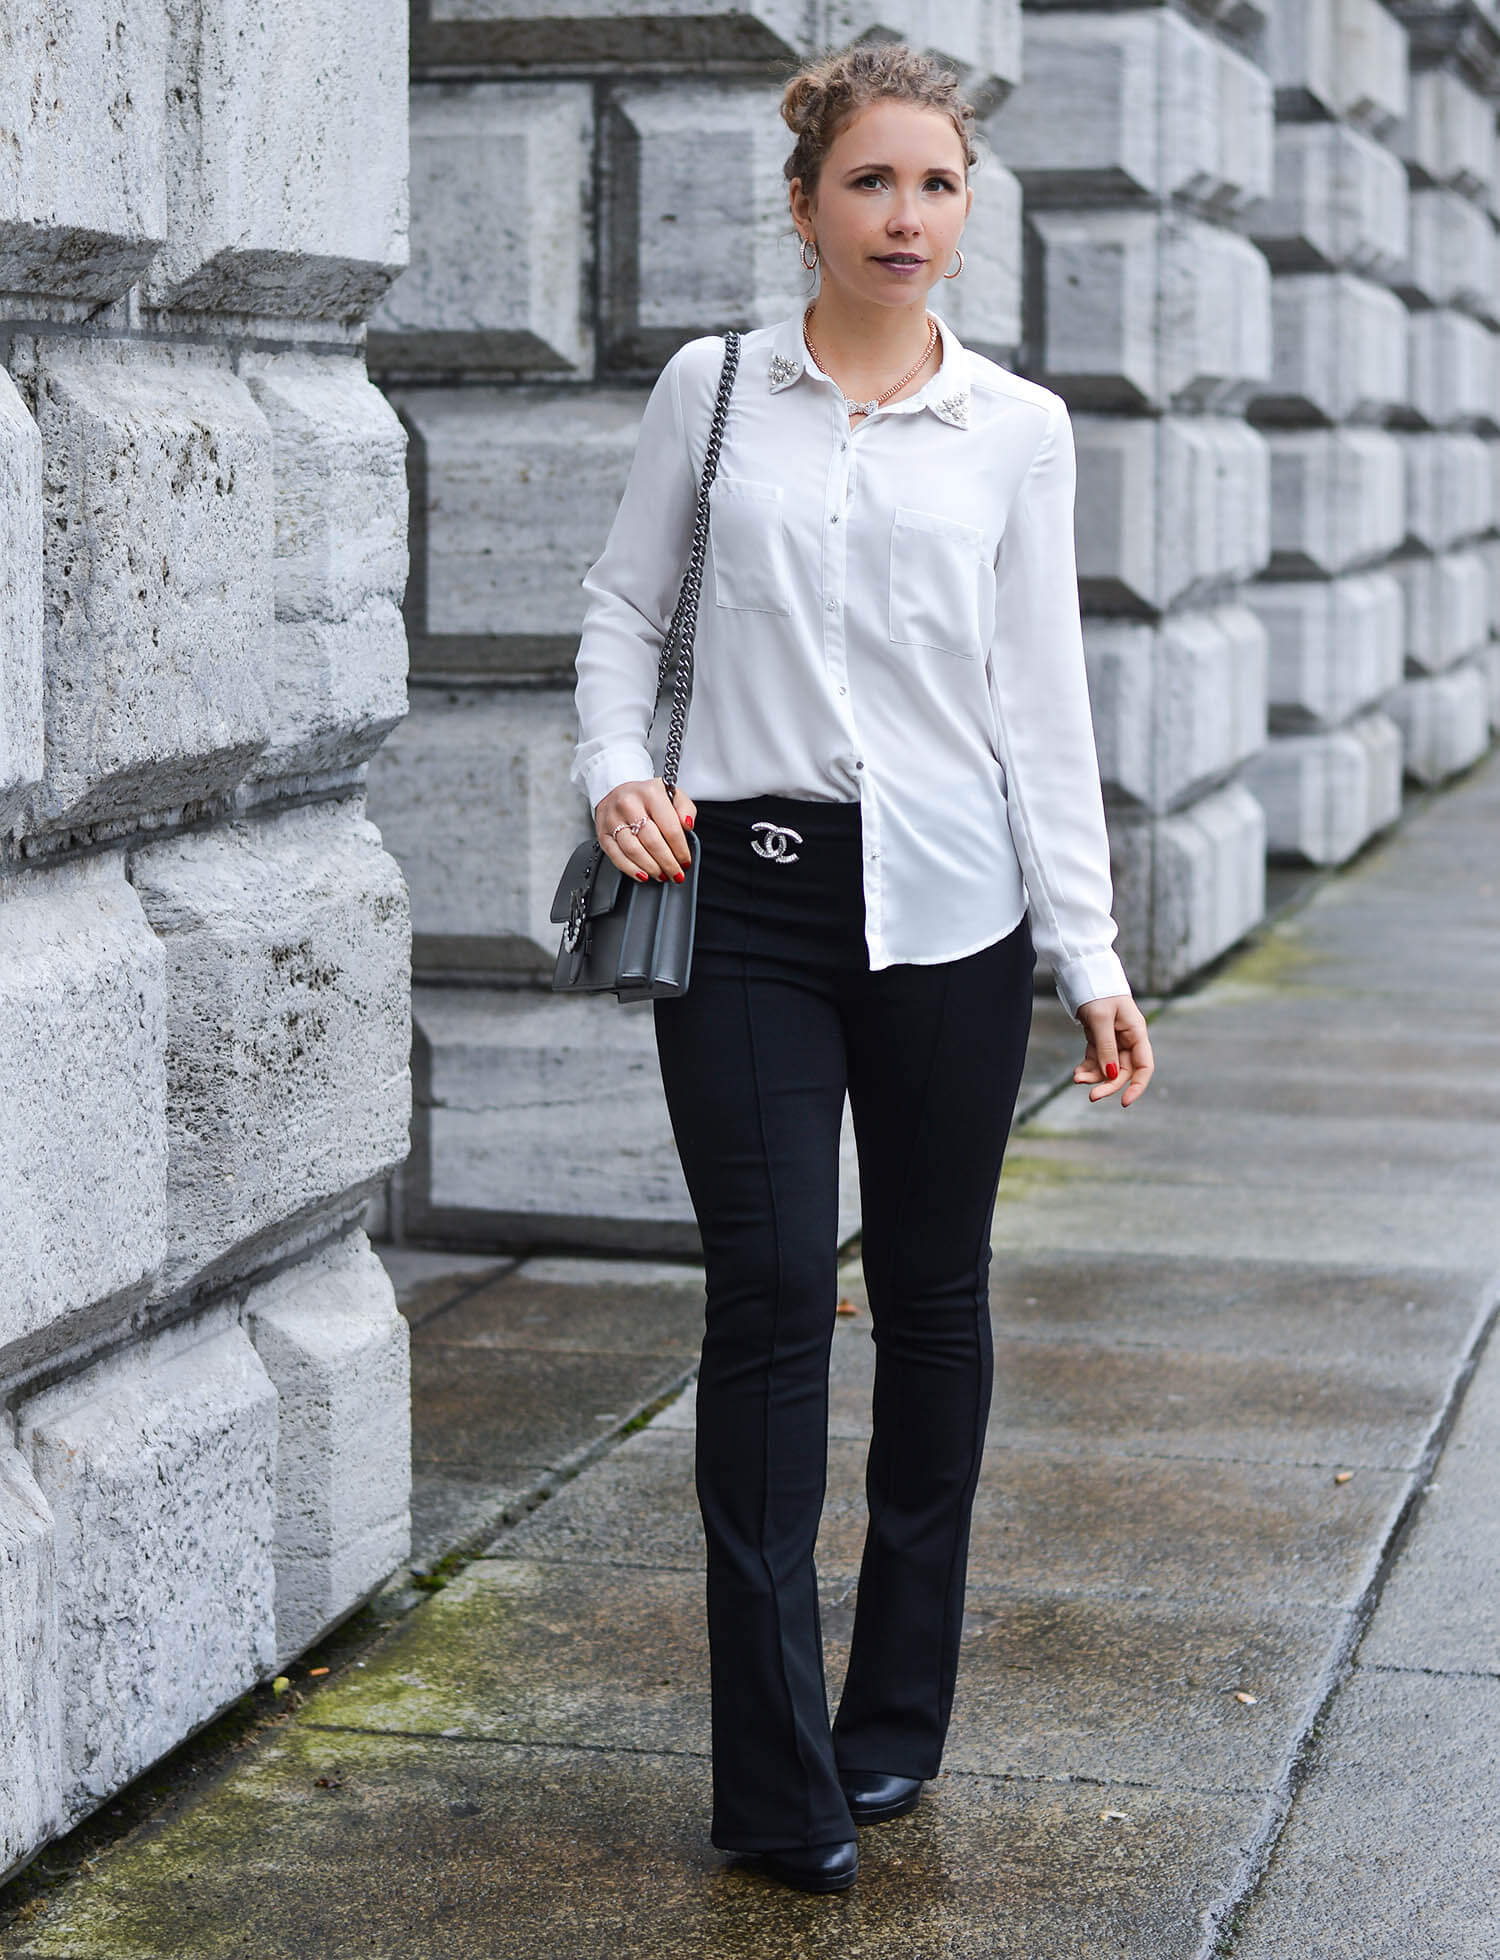 Kationette-fashionblogger-nrw-Outfit-White-Blouse-Flared-Pants-and-Pinko-Bag-blackandwhite-streetstyle